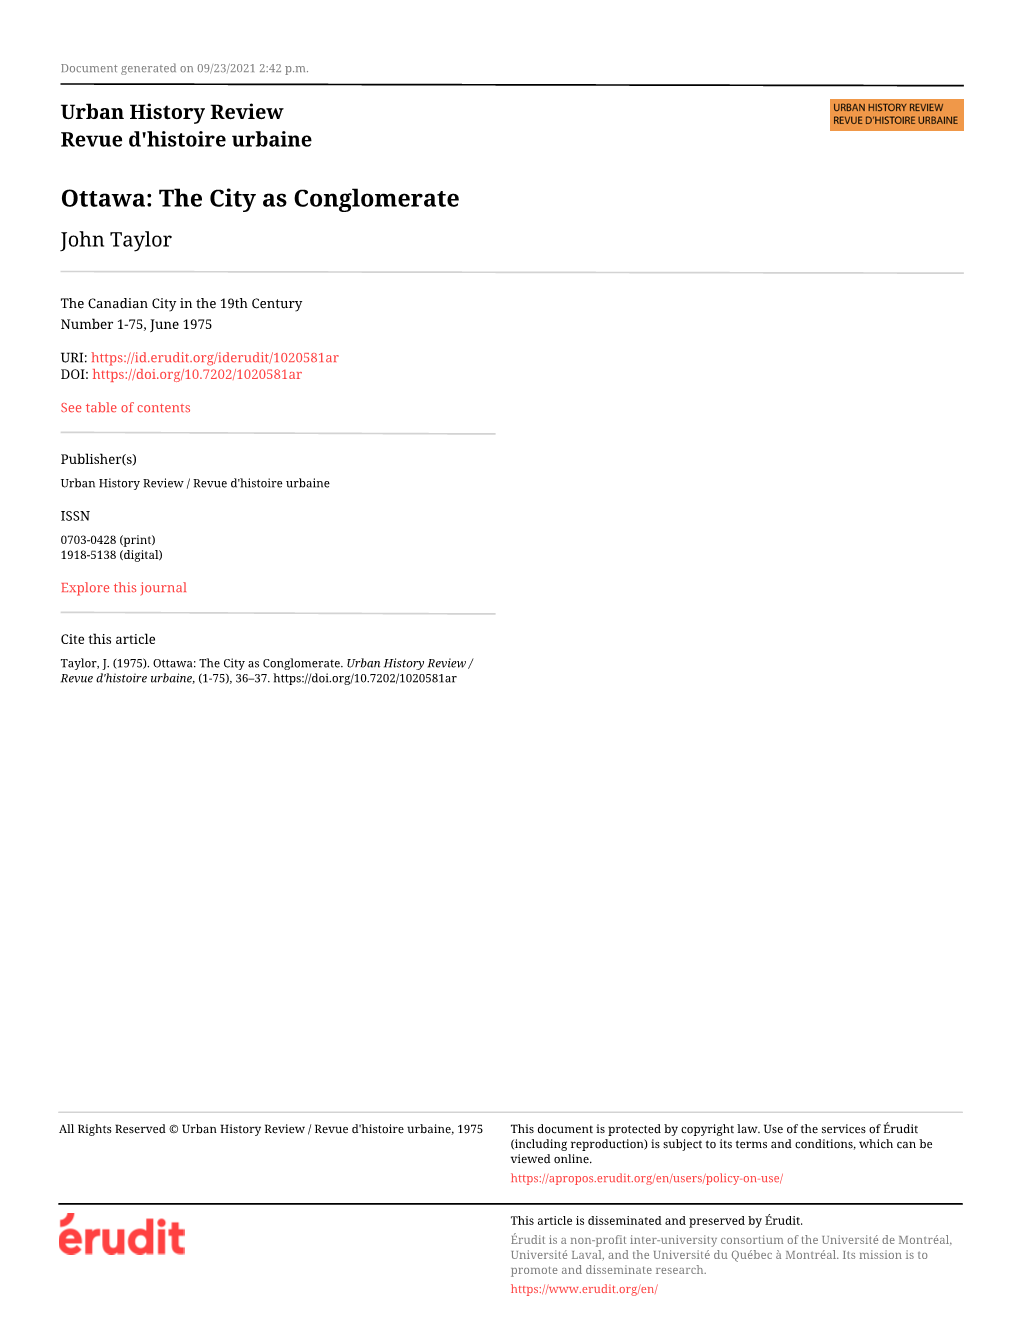 Ottawa: the City As Conglomerate John Taylor